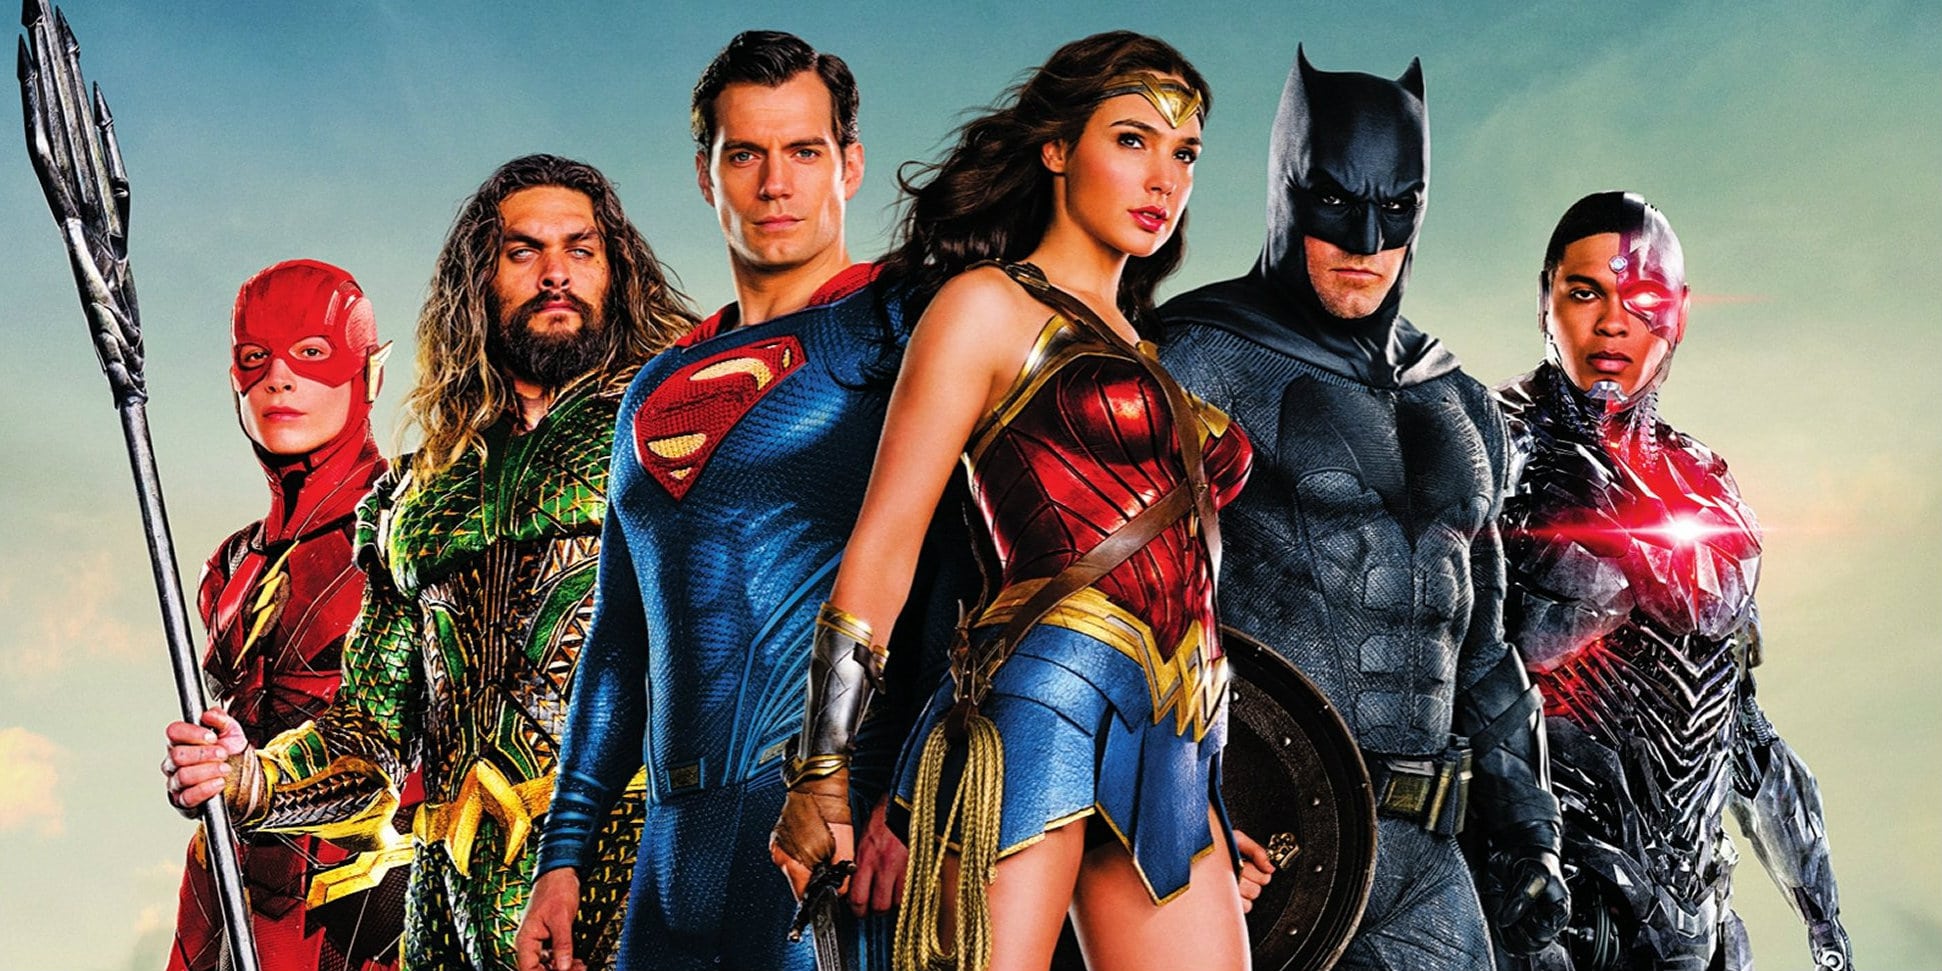 Justice League: #ReleaseTheSnyderCut Trends Worldwide With Over 60k Tweets